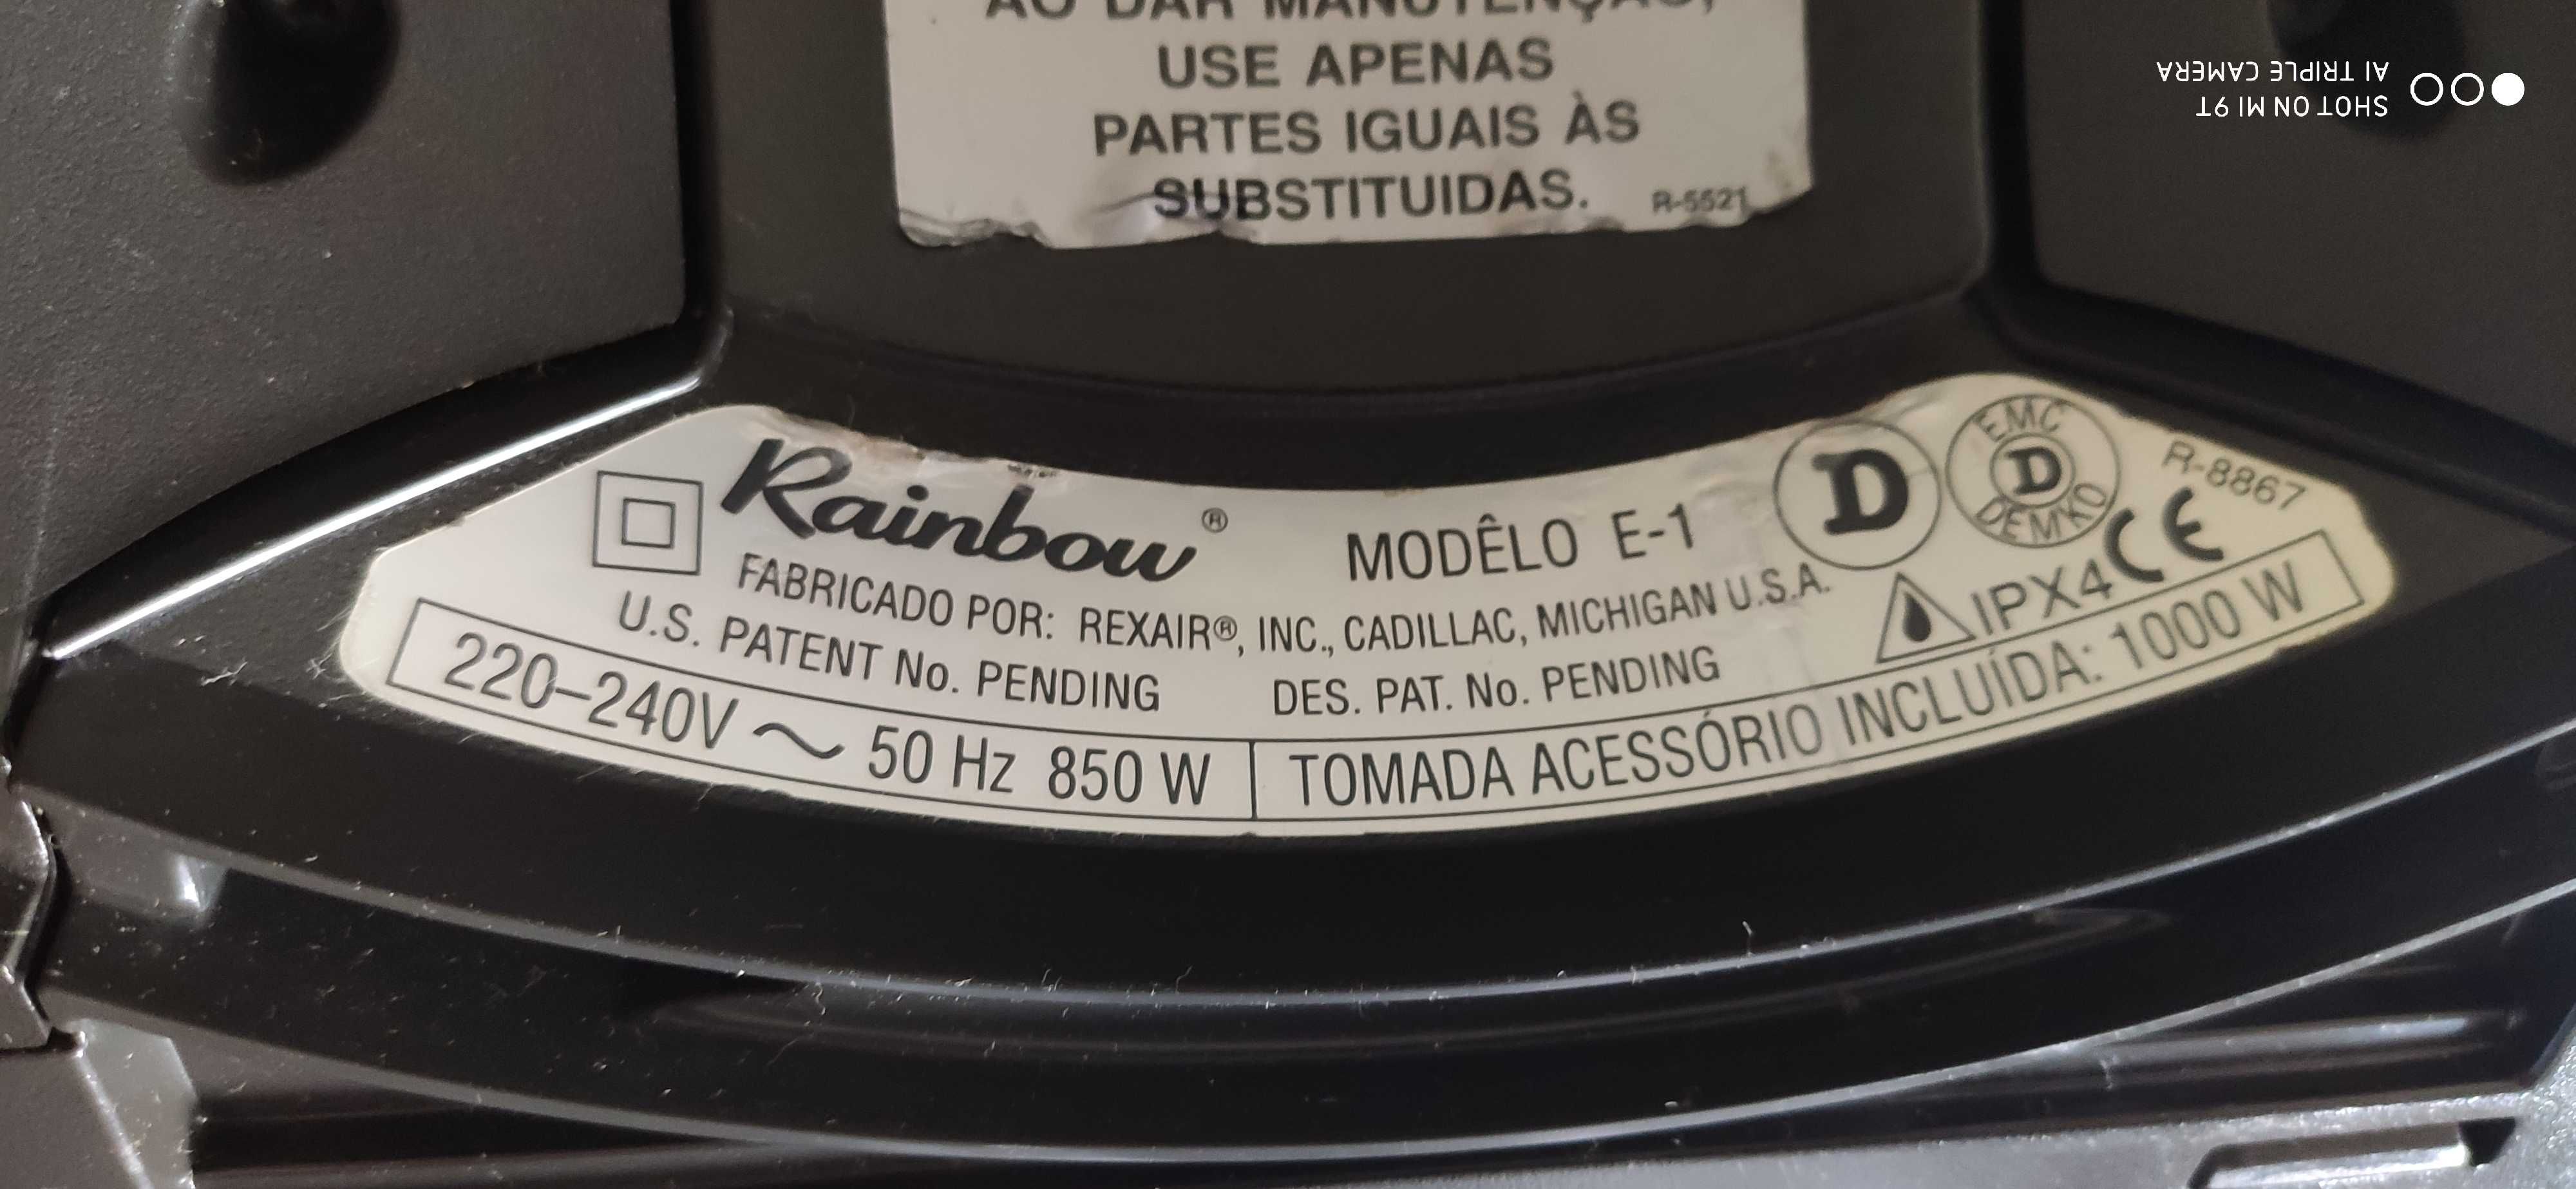 Aspirador Rainbow - E1 - Semi Novo